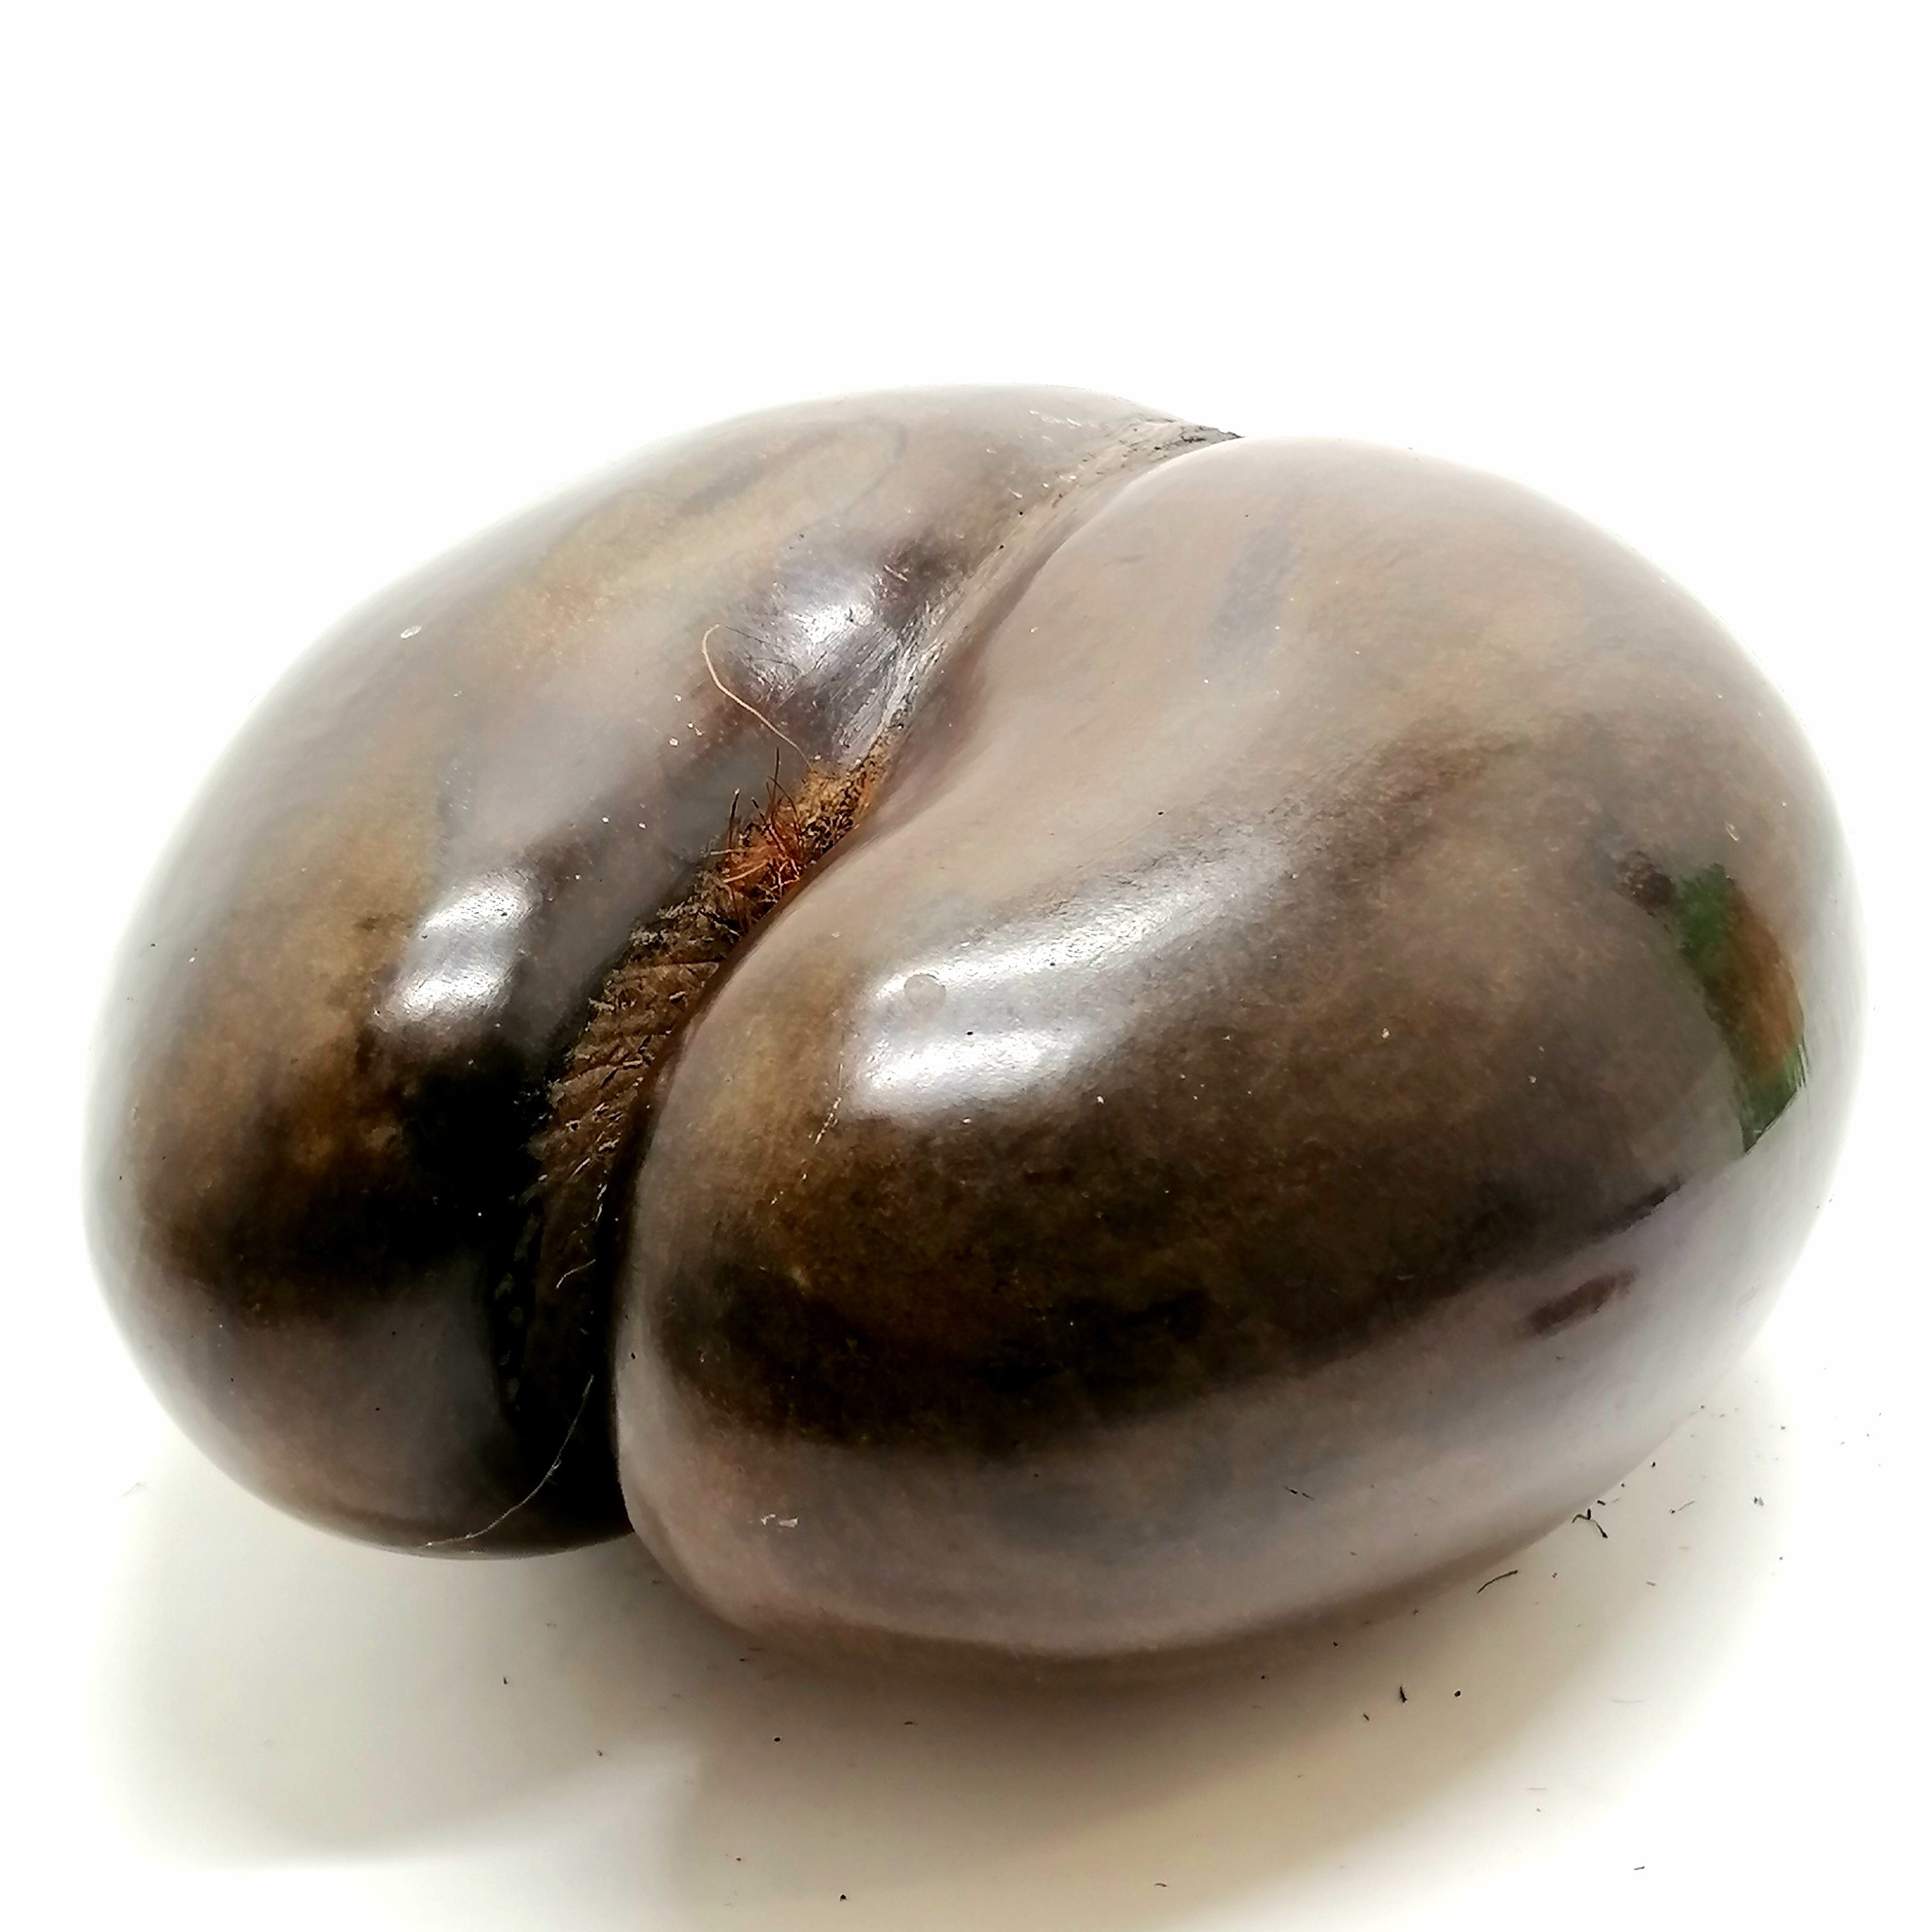 Coco de mer (Lodoicea) nut / seed - 25cm x 26cm & 1.1kg - Image 2 of 4